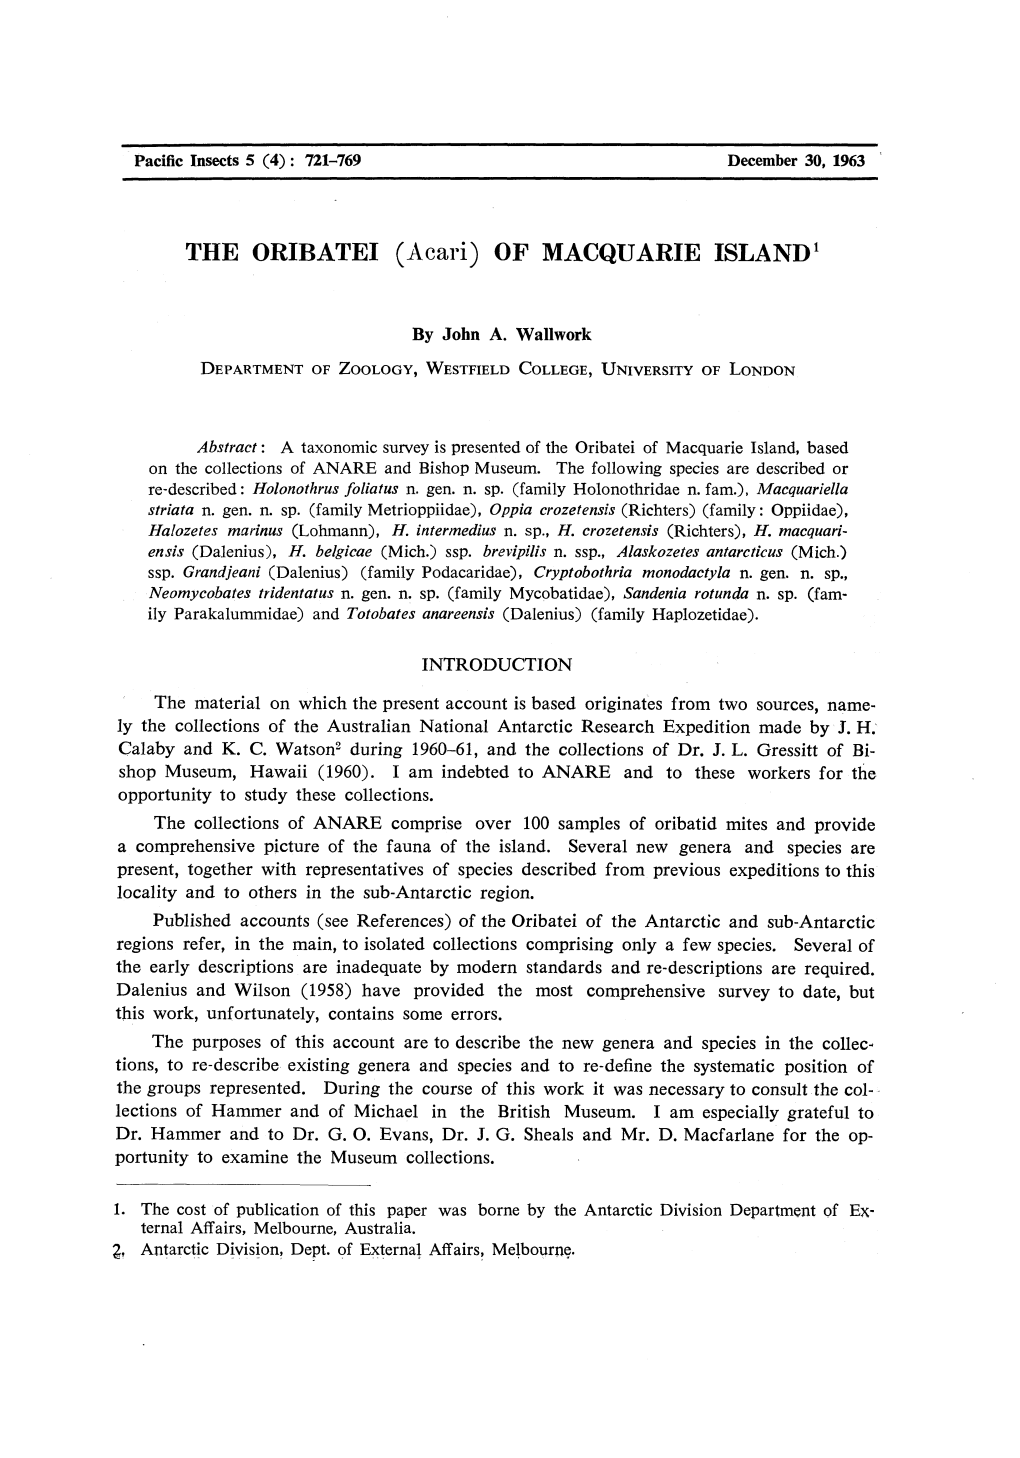 THE ORIBATEI (Acari) of MACQUARIE ISLAND1